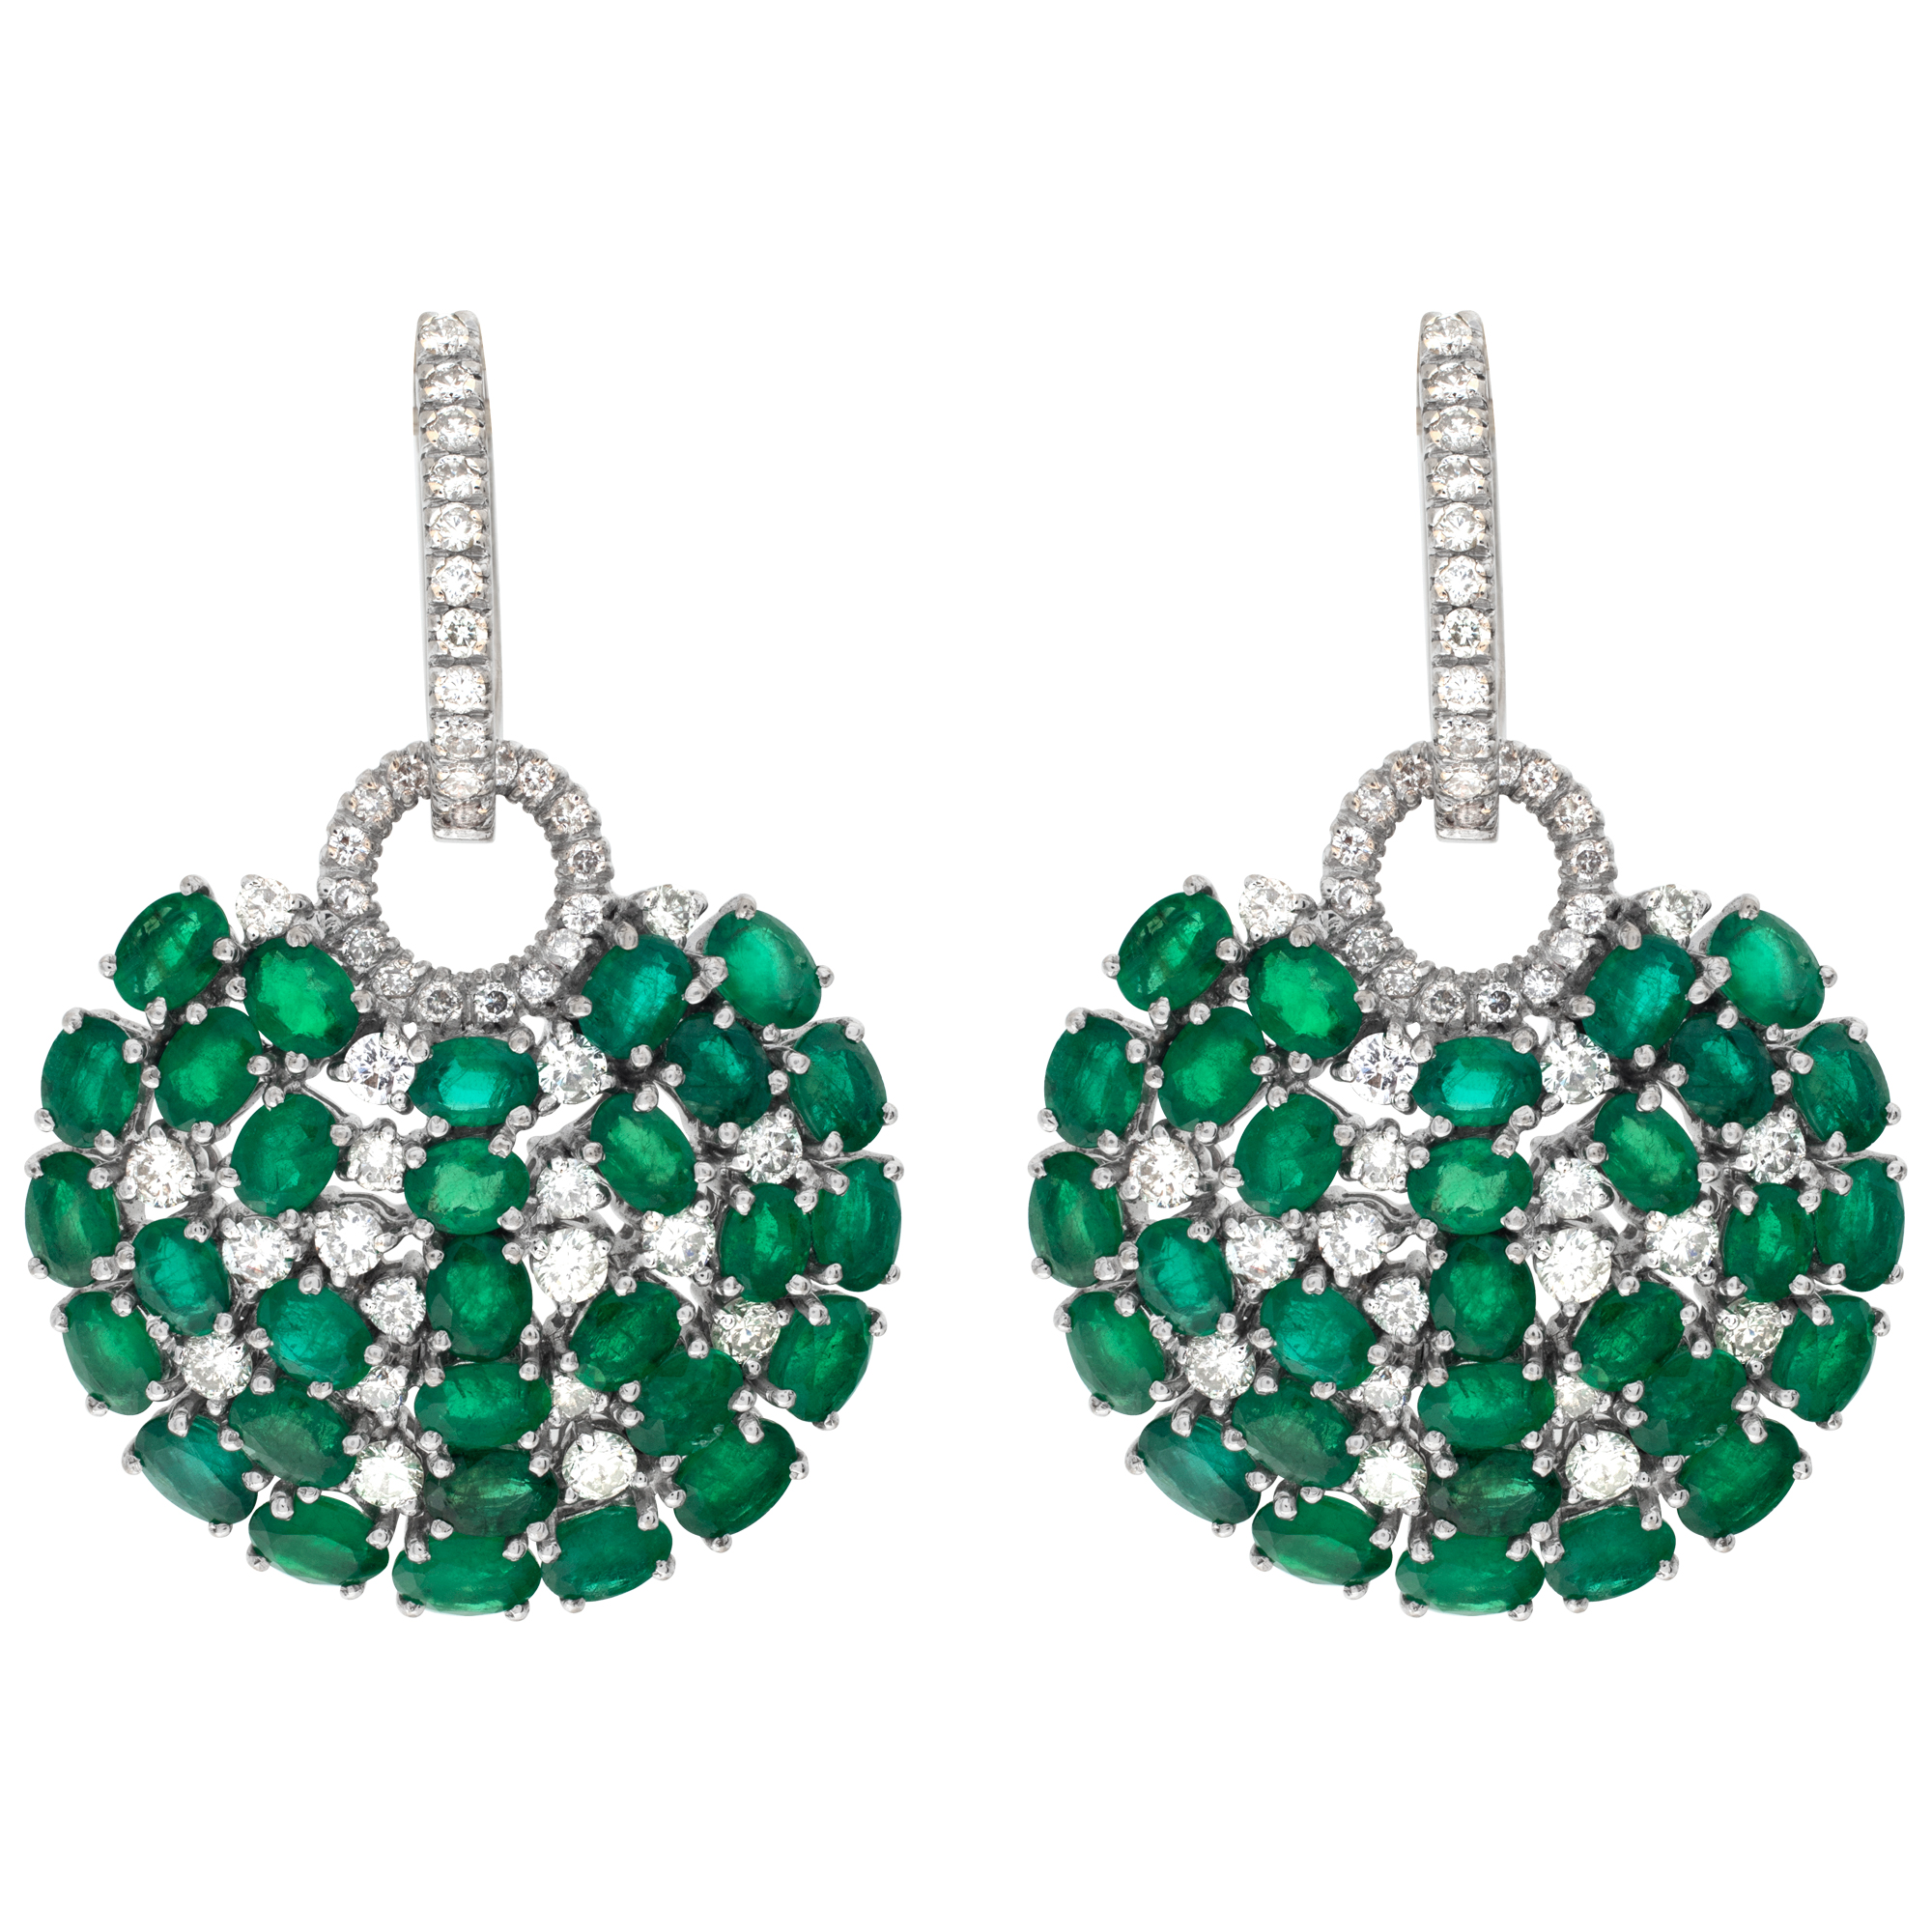 Lovely 18k white gold diamond and emerald drop earrings